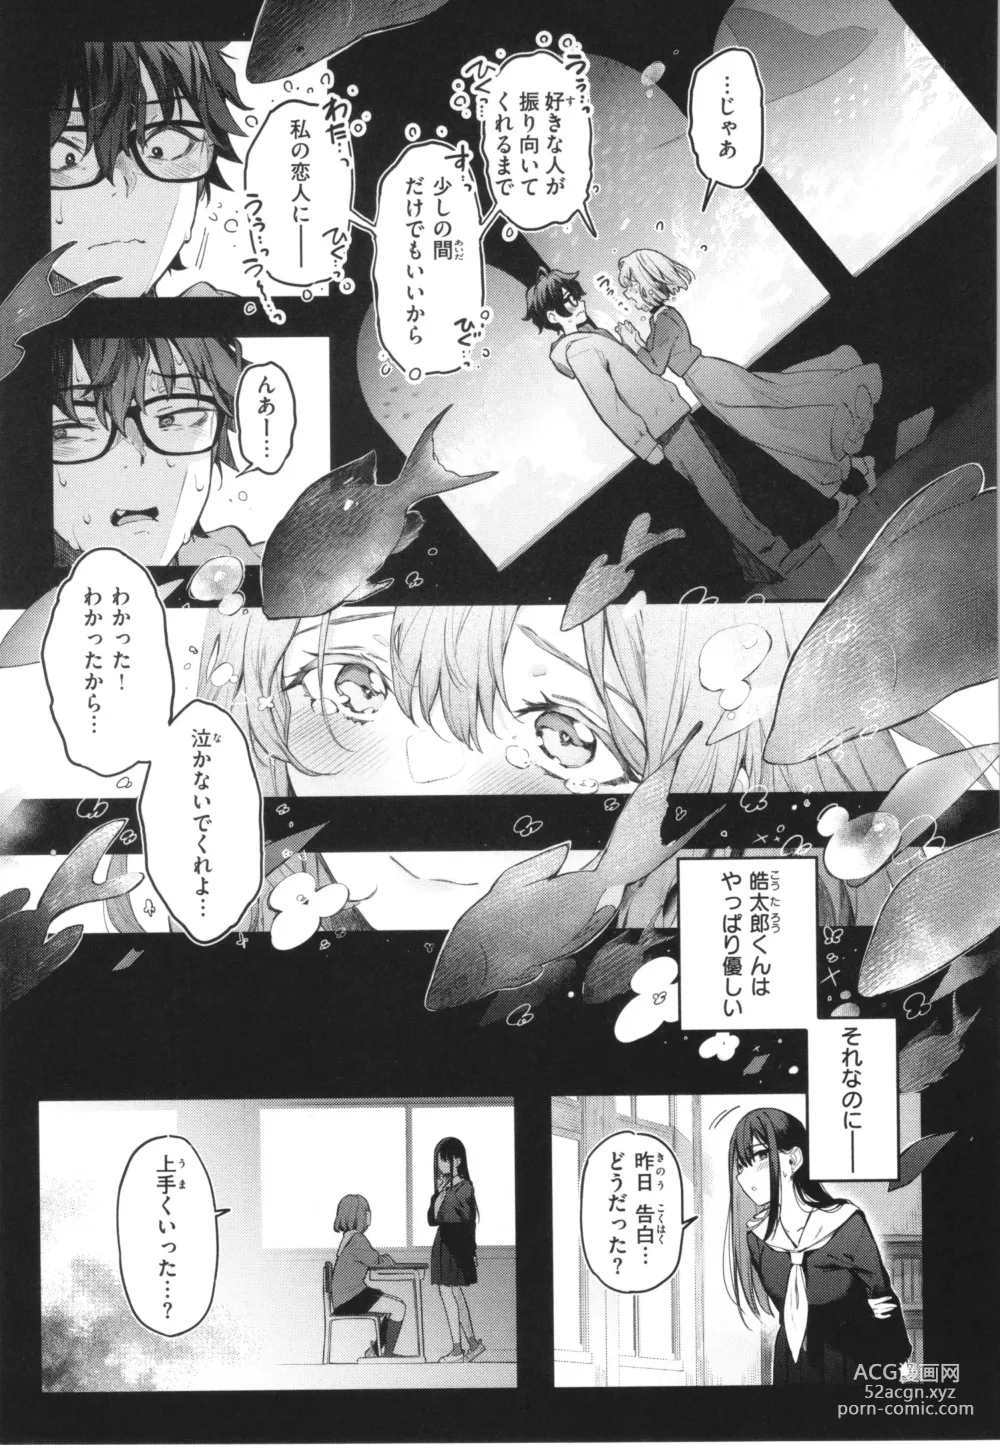 Page 240 of manga Katakoi Fragment